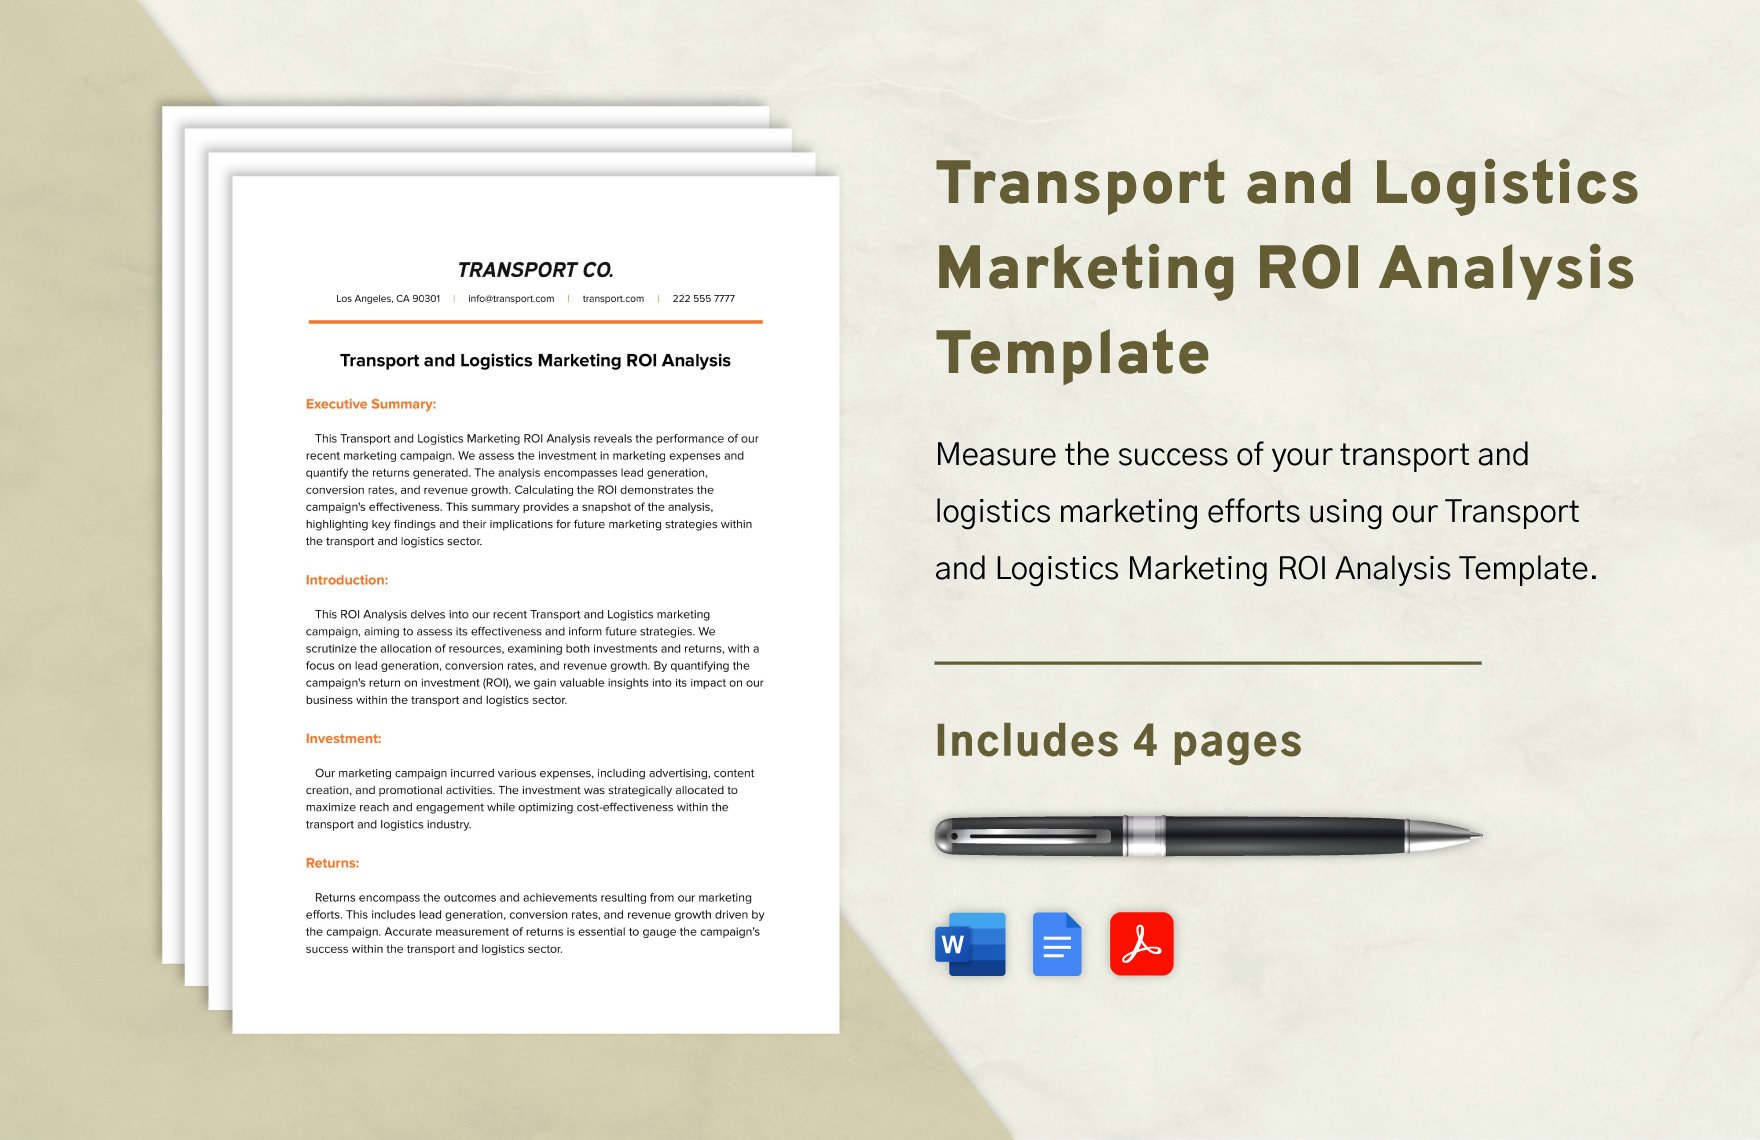 Transport and Logistics Marketing ROI Analysis Template